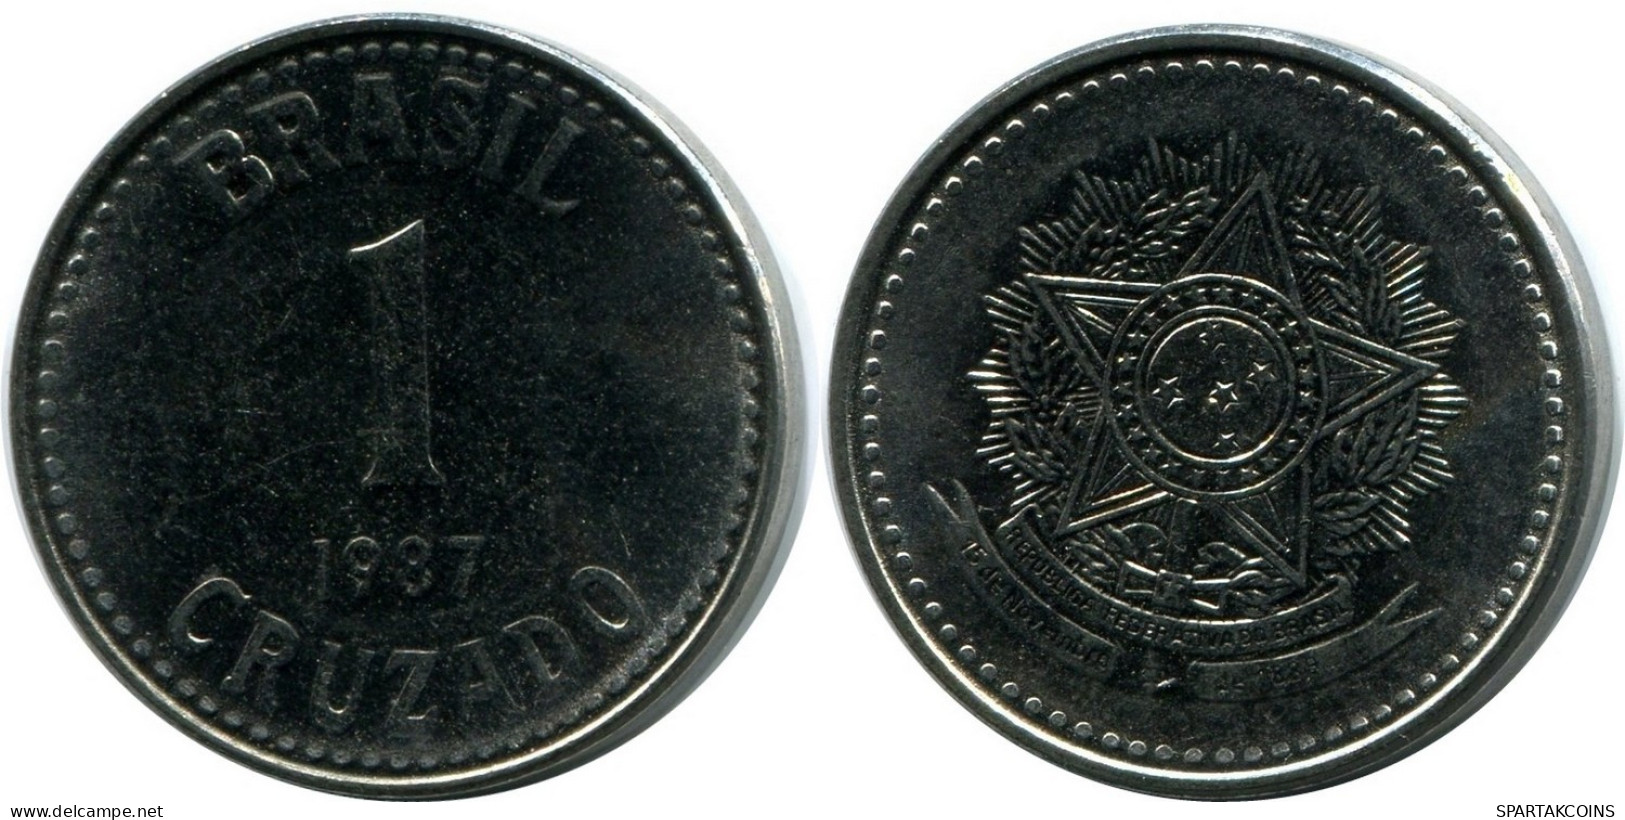 1 CRUZADO 1987 BBASIL BRAZIL Moneda UNC #M10275.E.A - Brésil